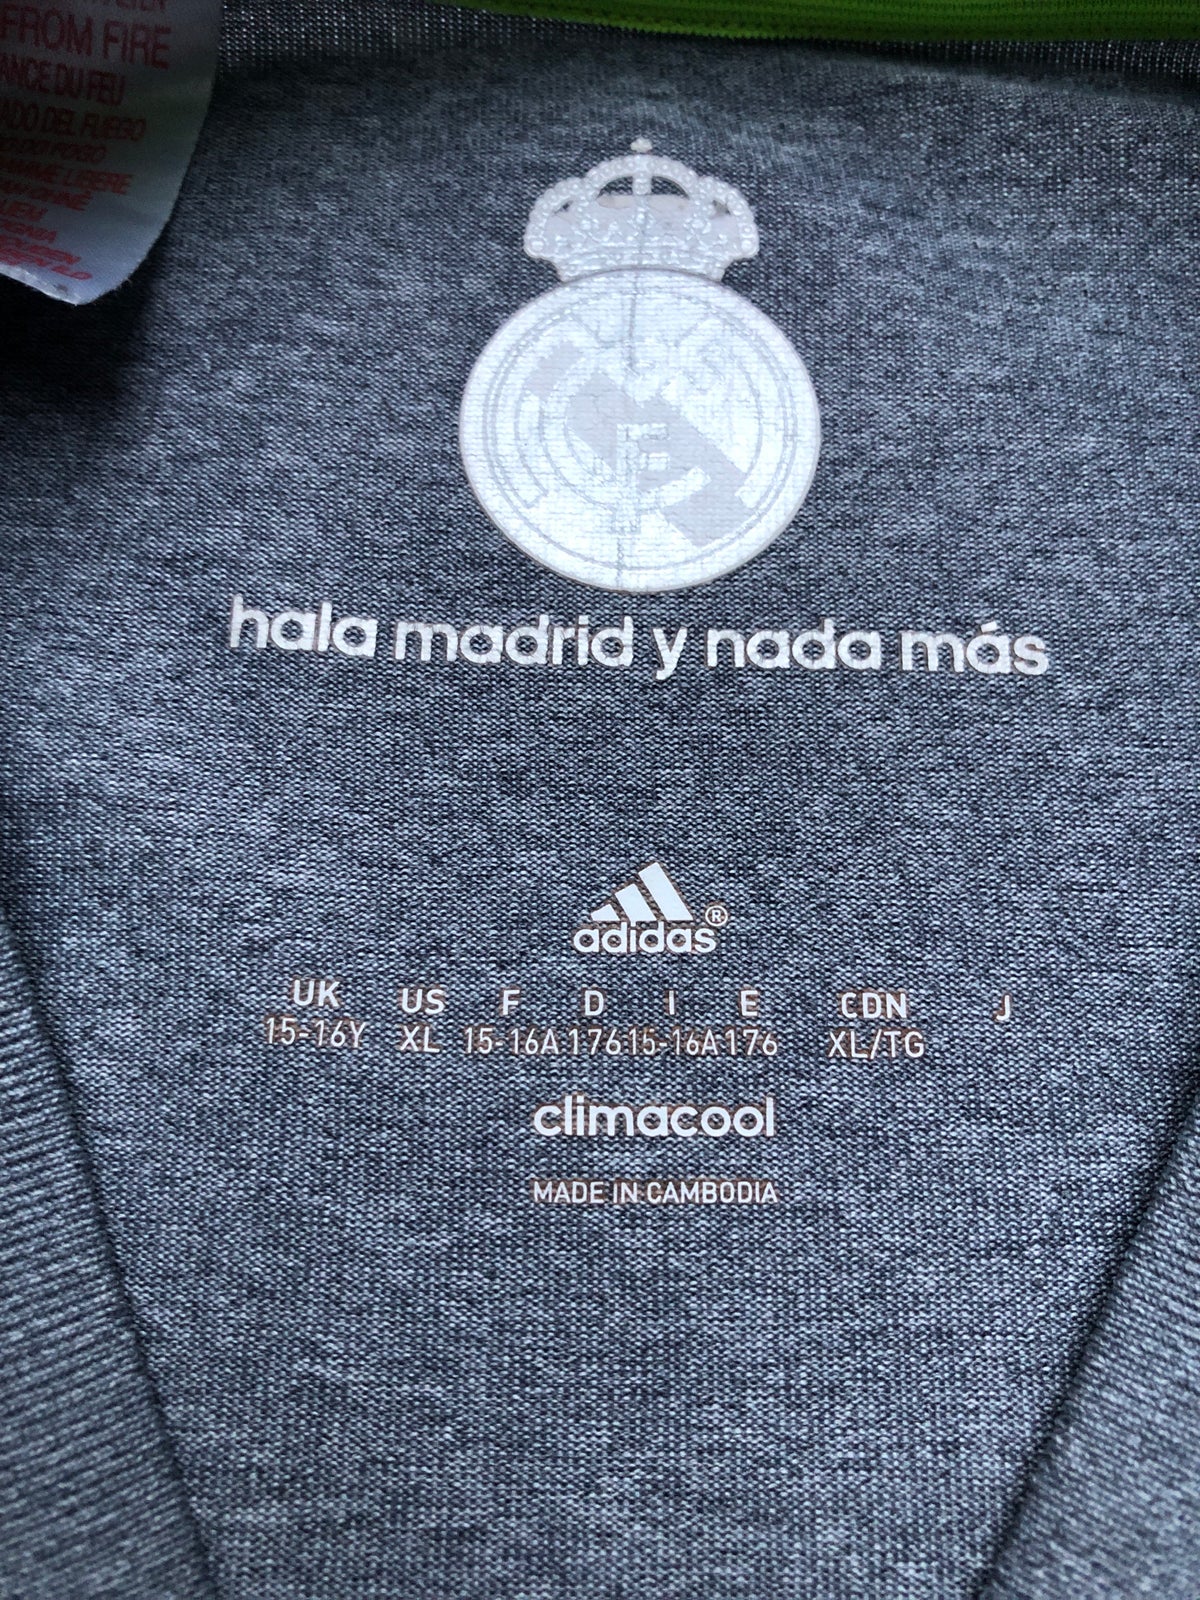 Fodboldtrøje, Real Madrid C. F. Udebane 2015/16, Adidas